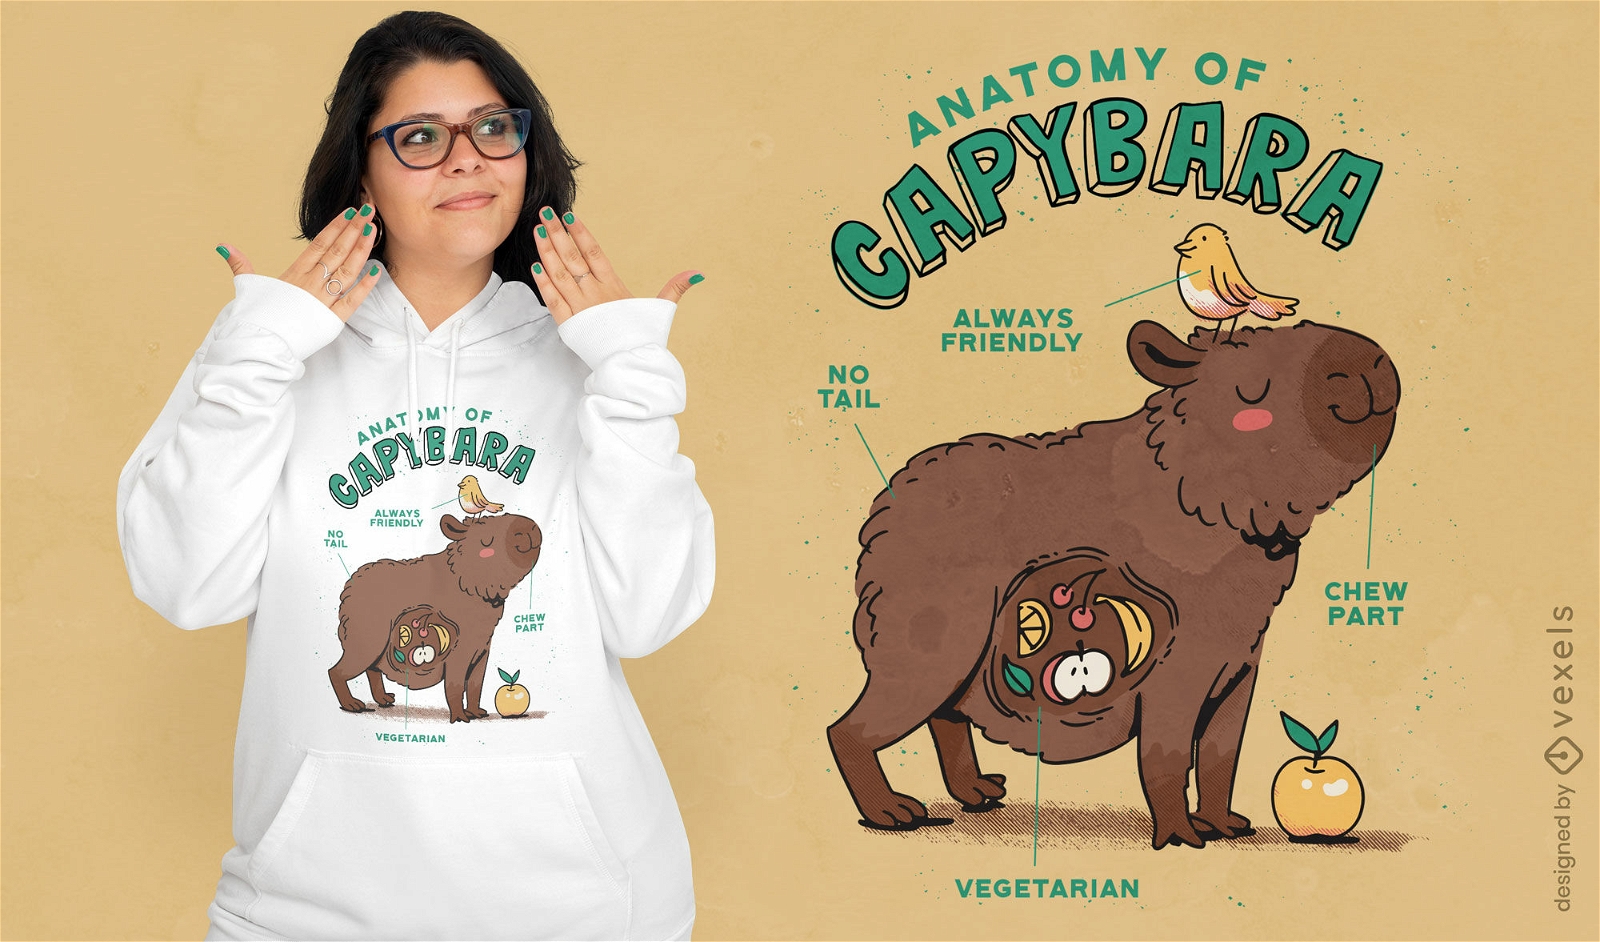 Anatomy of a capybara t-shirt design